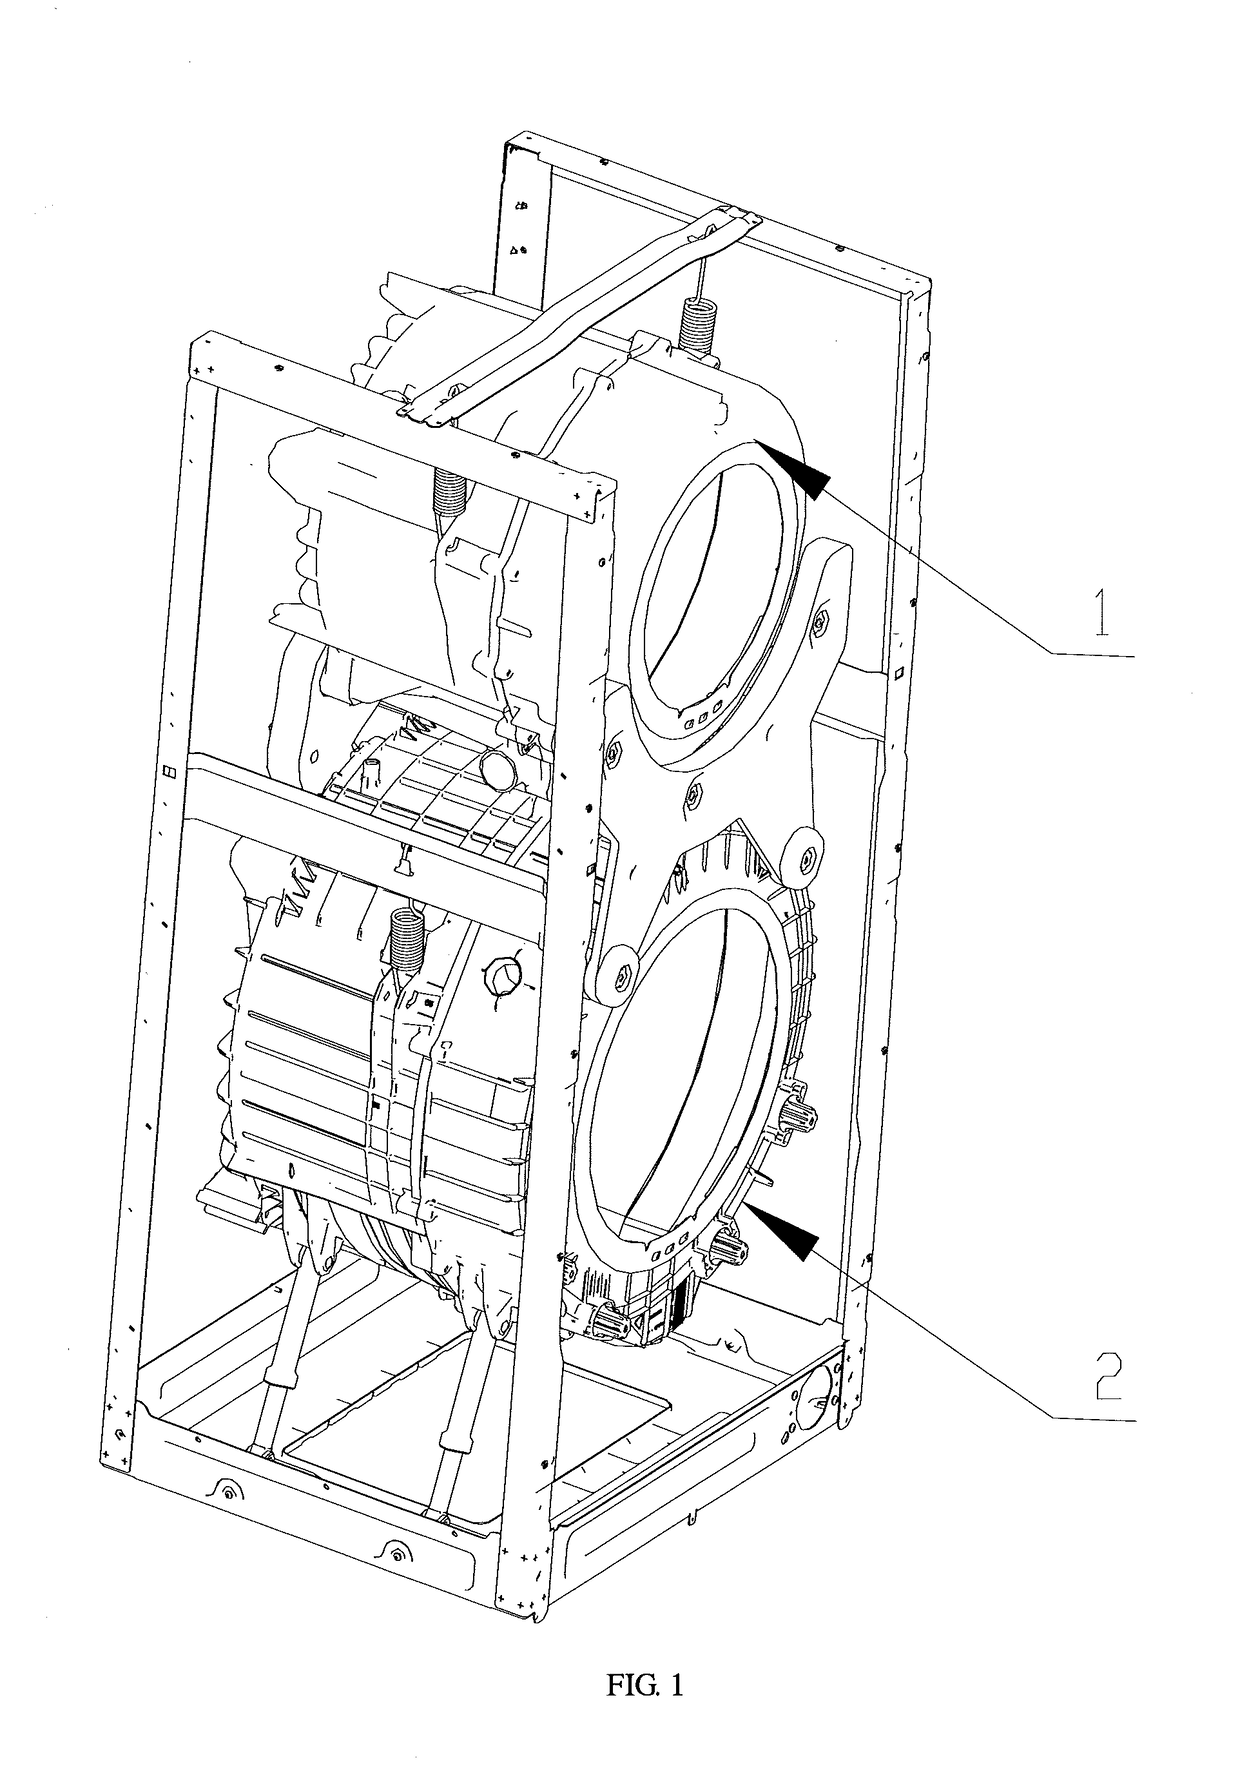 A replenishment control method of a multi-drum washing machine